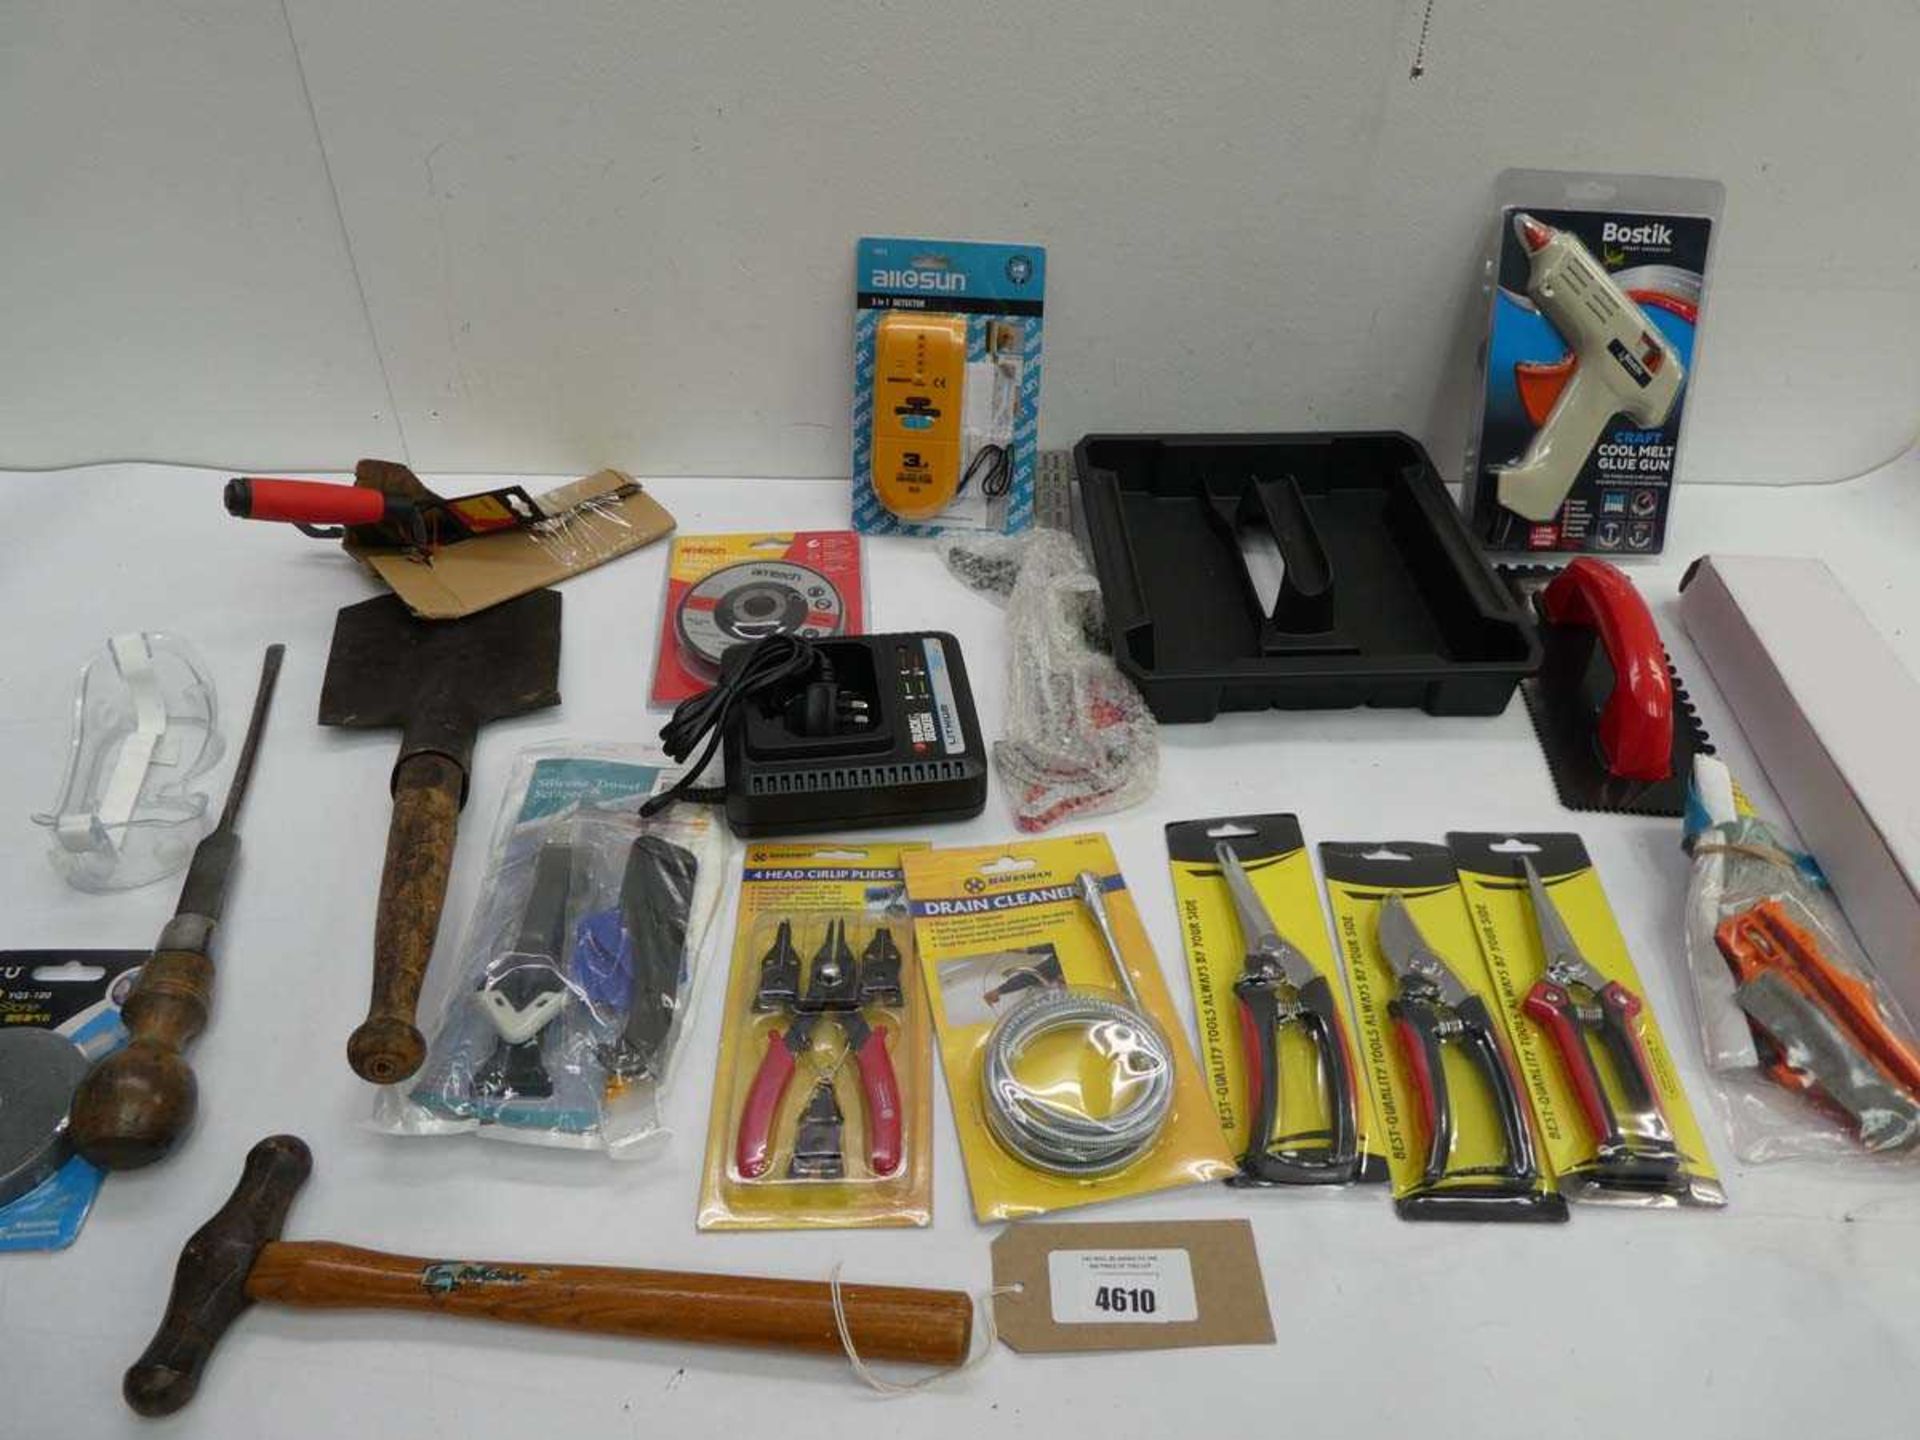 +VAT Robi Sorby screwdriver, Feldspaten trench spade, glue gun, circlip pliers, hammer, grinding